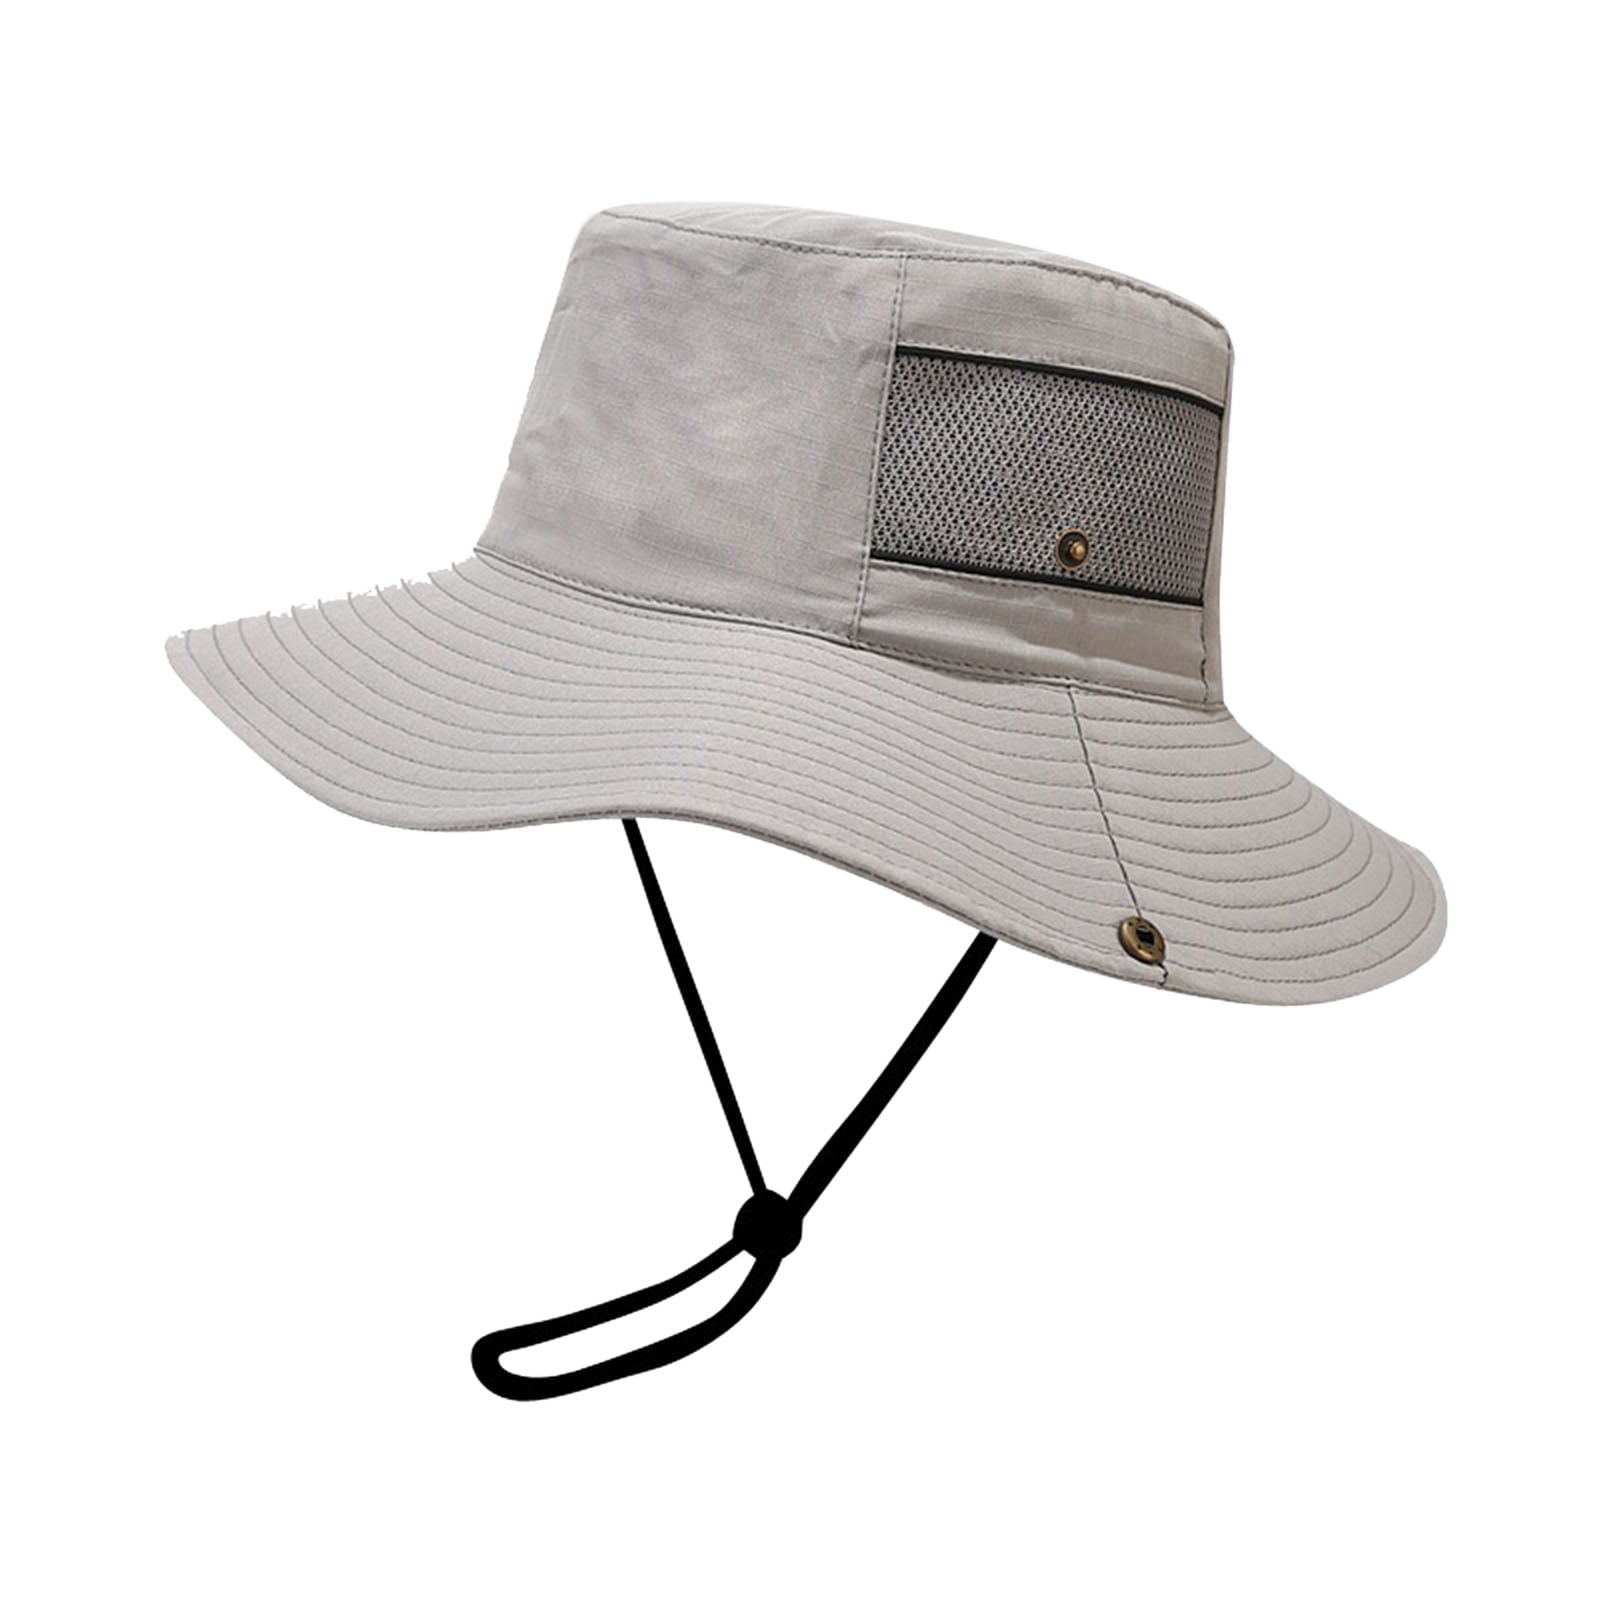 Bush Hat Men's Sun Hat 61 Breathable Wide Brim Boonie Hat Outdoor Mesh Cap  For Travel Fishing Hair Hat Alt Hat 